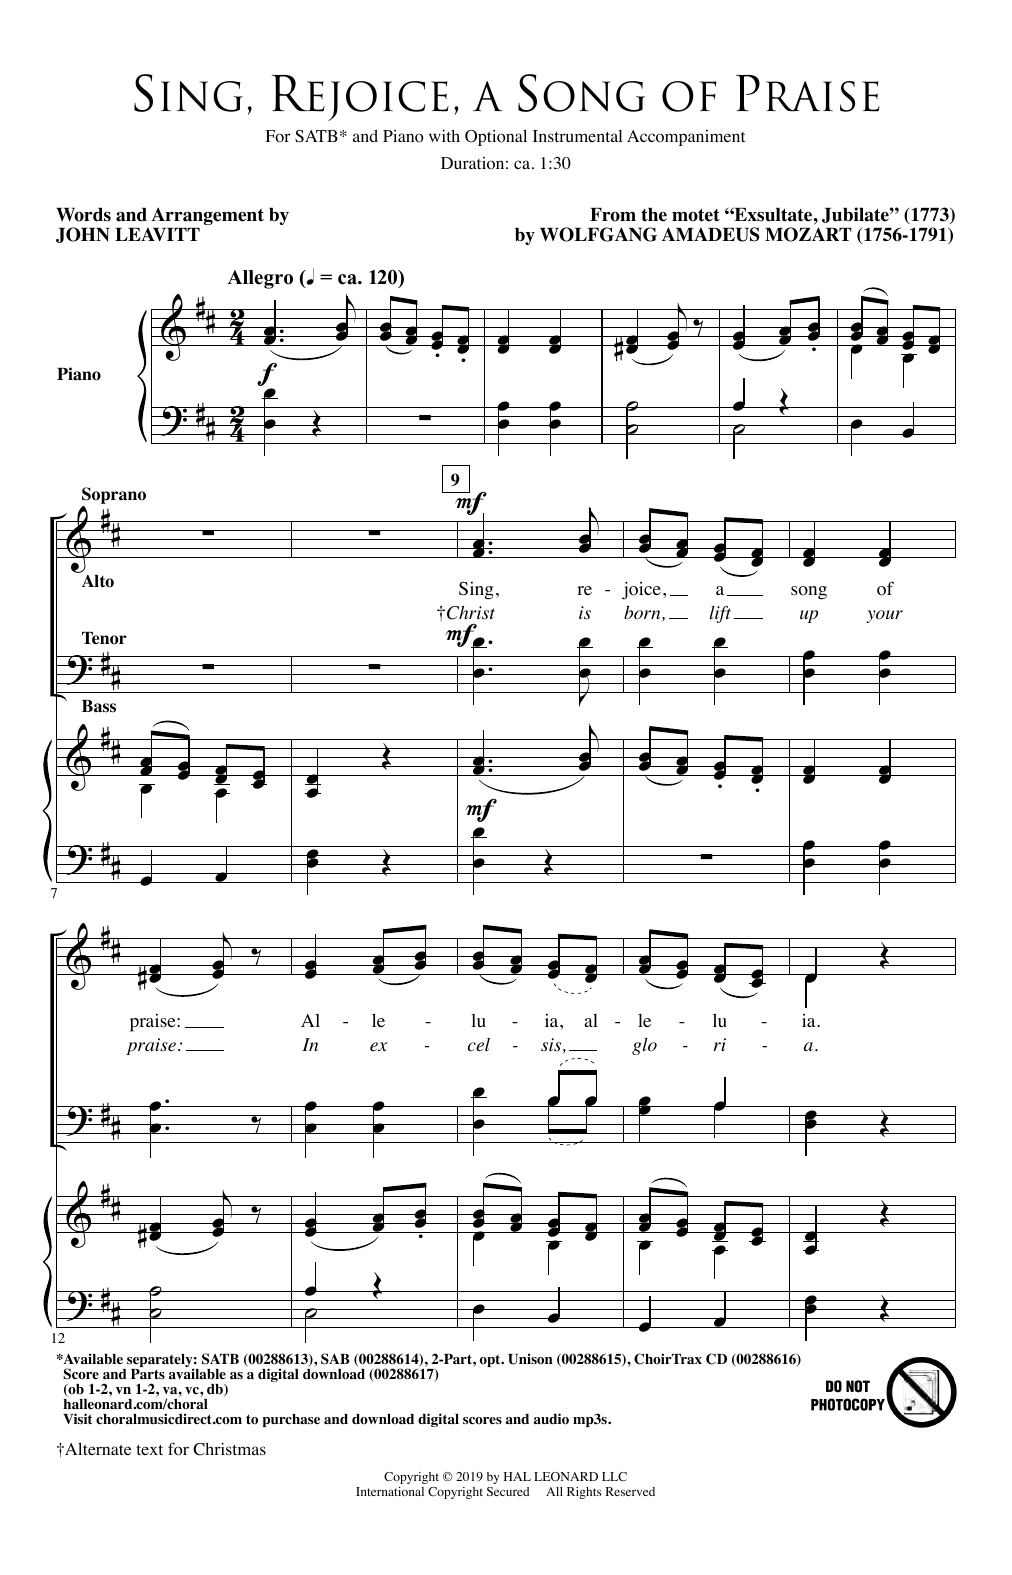 Wolfgang Amadeus Mozart Sing, Rejoice A Song Of Praise (arr. John Leavitt) Sheet Music Notes & Chords for SATB Choir - Download or Print PDF